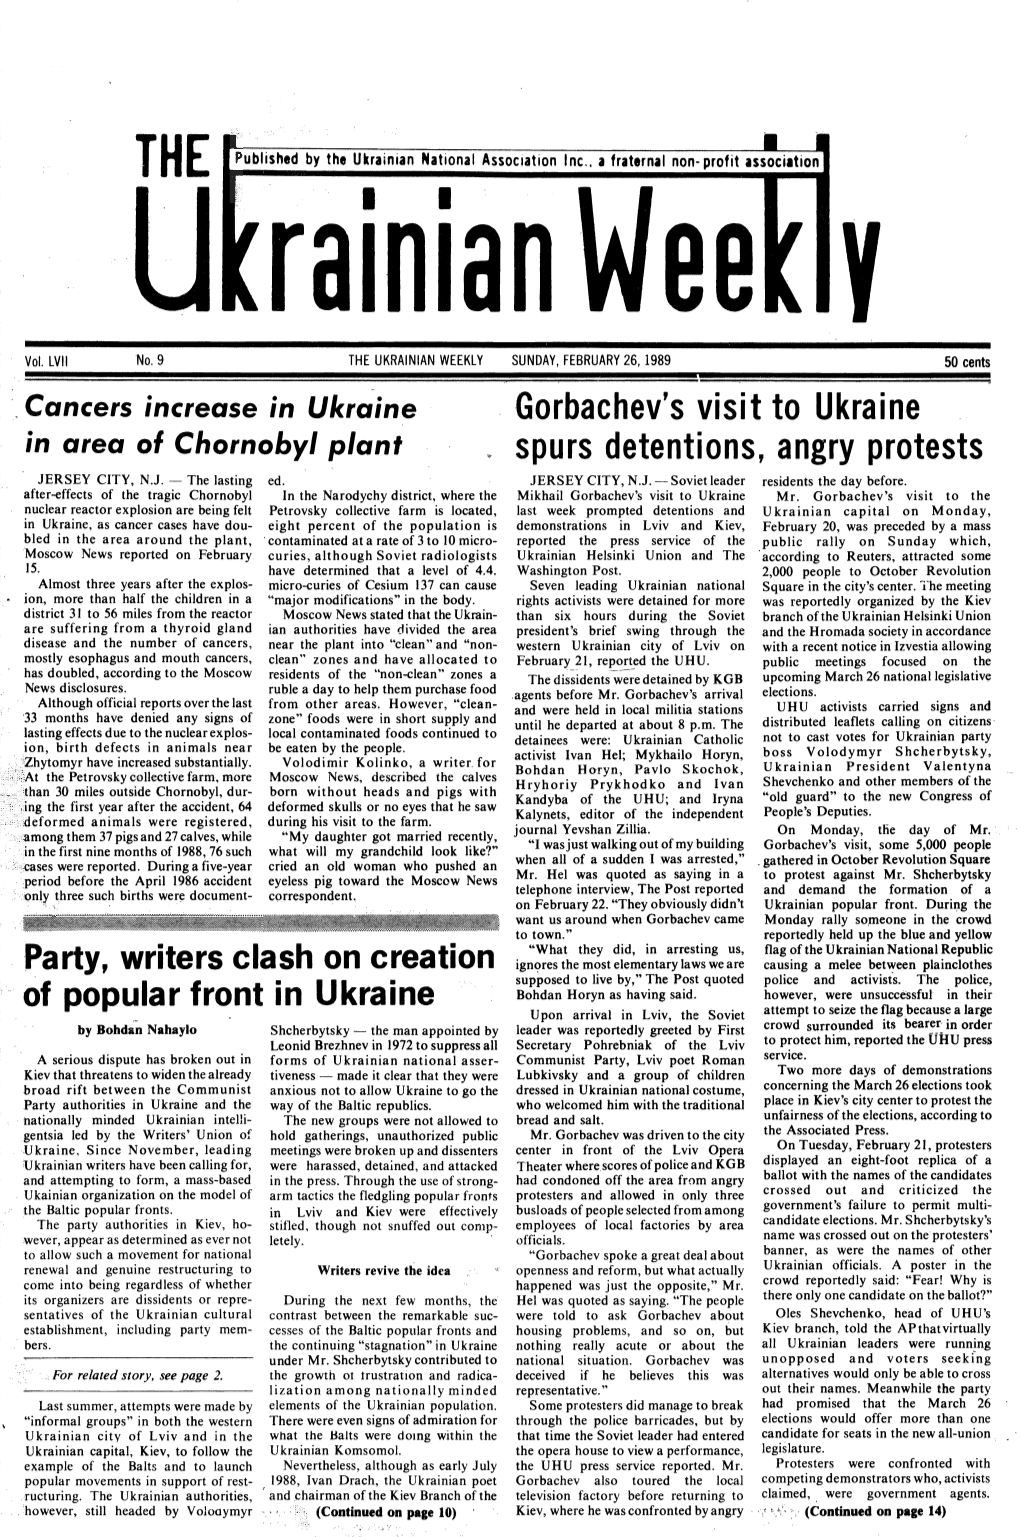 The Ukrainian Weekly 1989, No.9